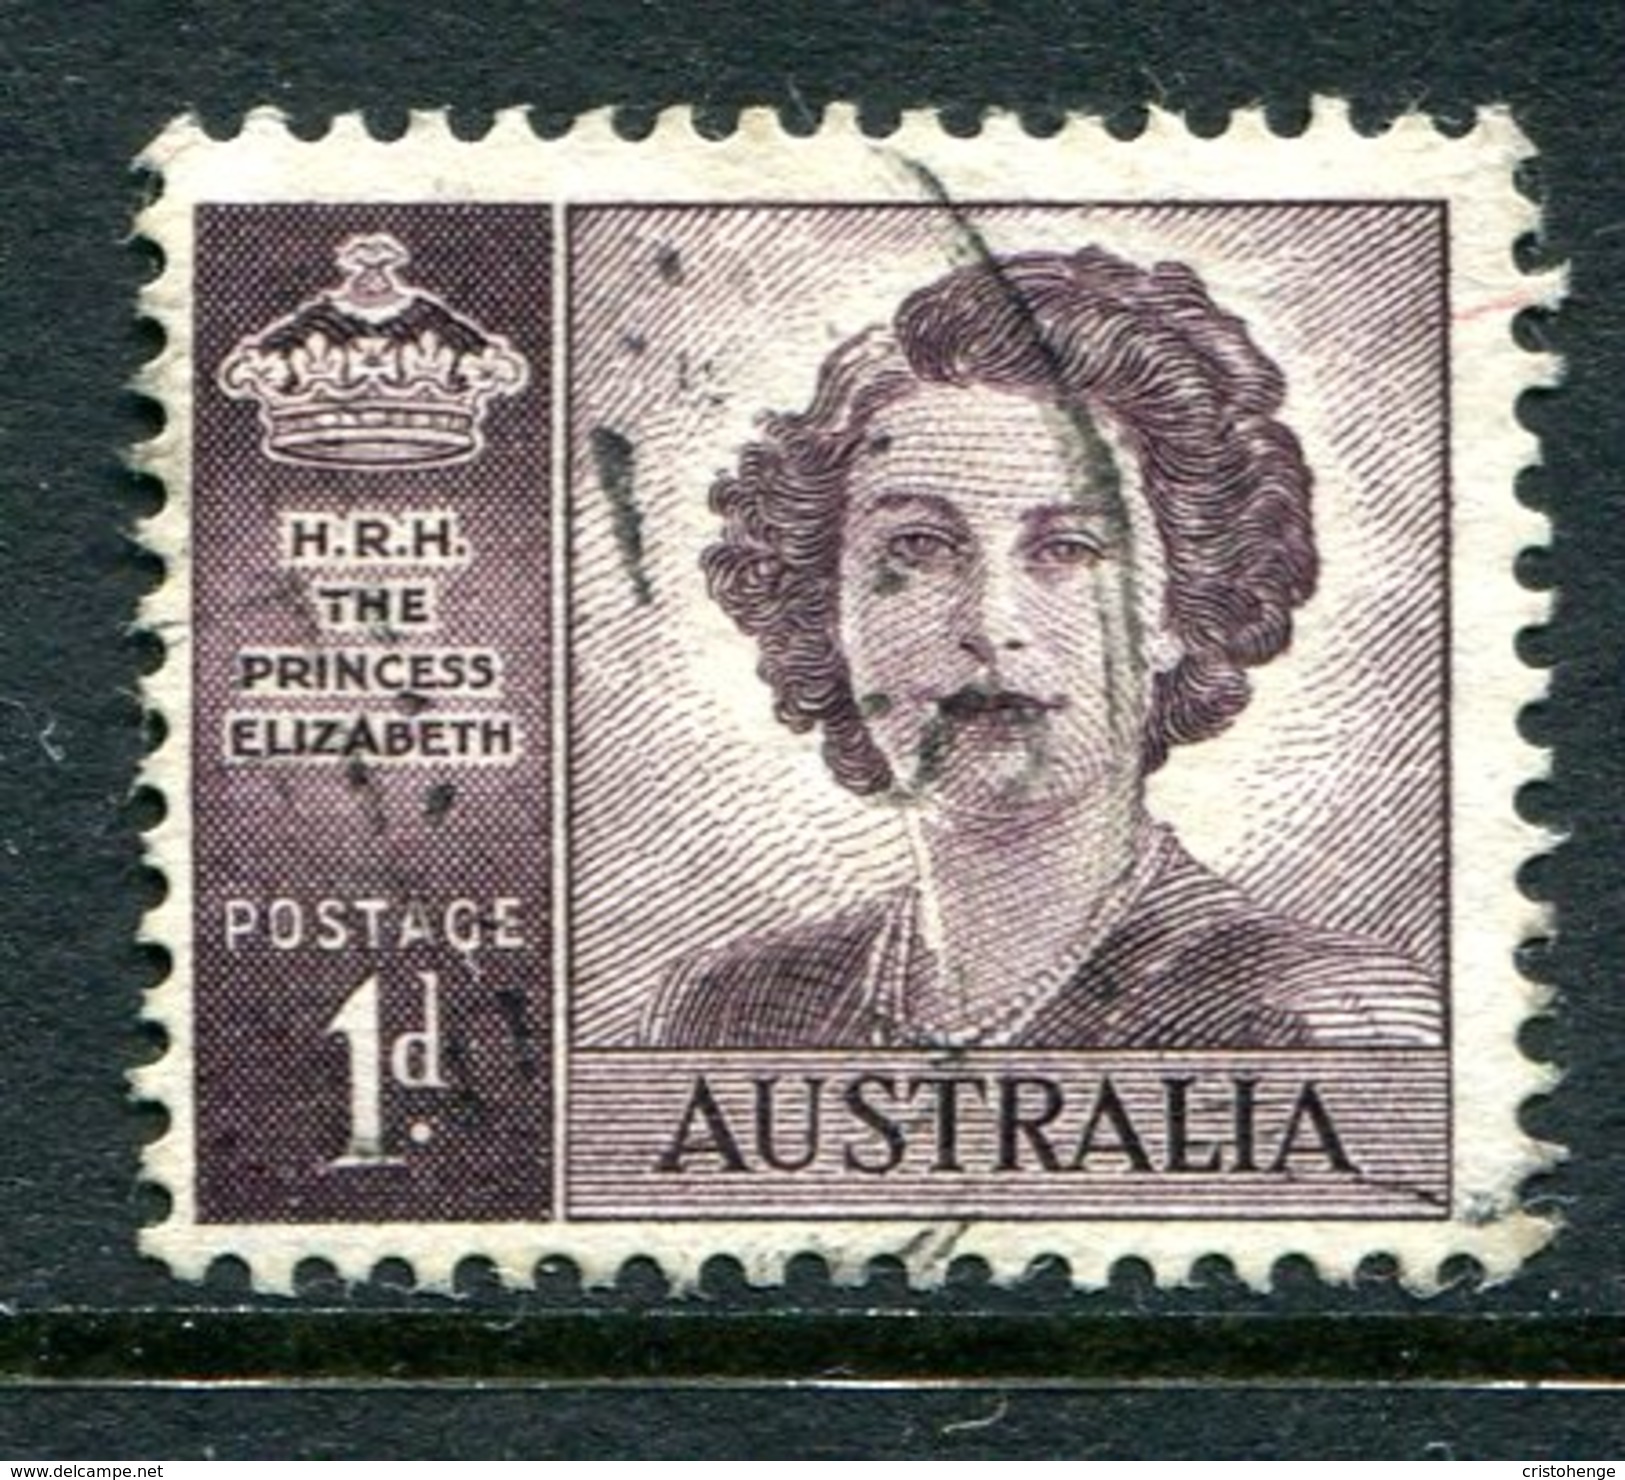 Australia 1947-52 Marriage Of Princess Elizabeth - No Wmk. Used (SG 222a) - Nuovi